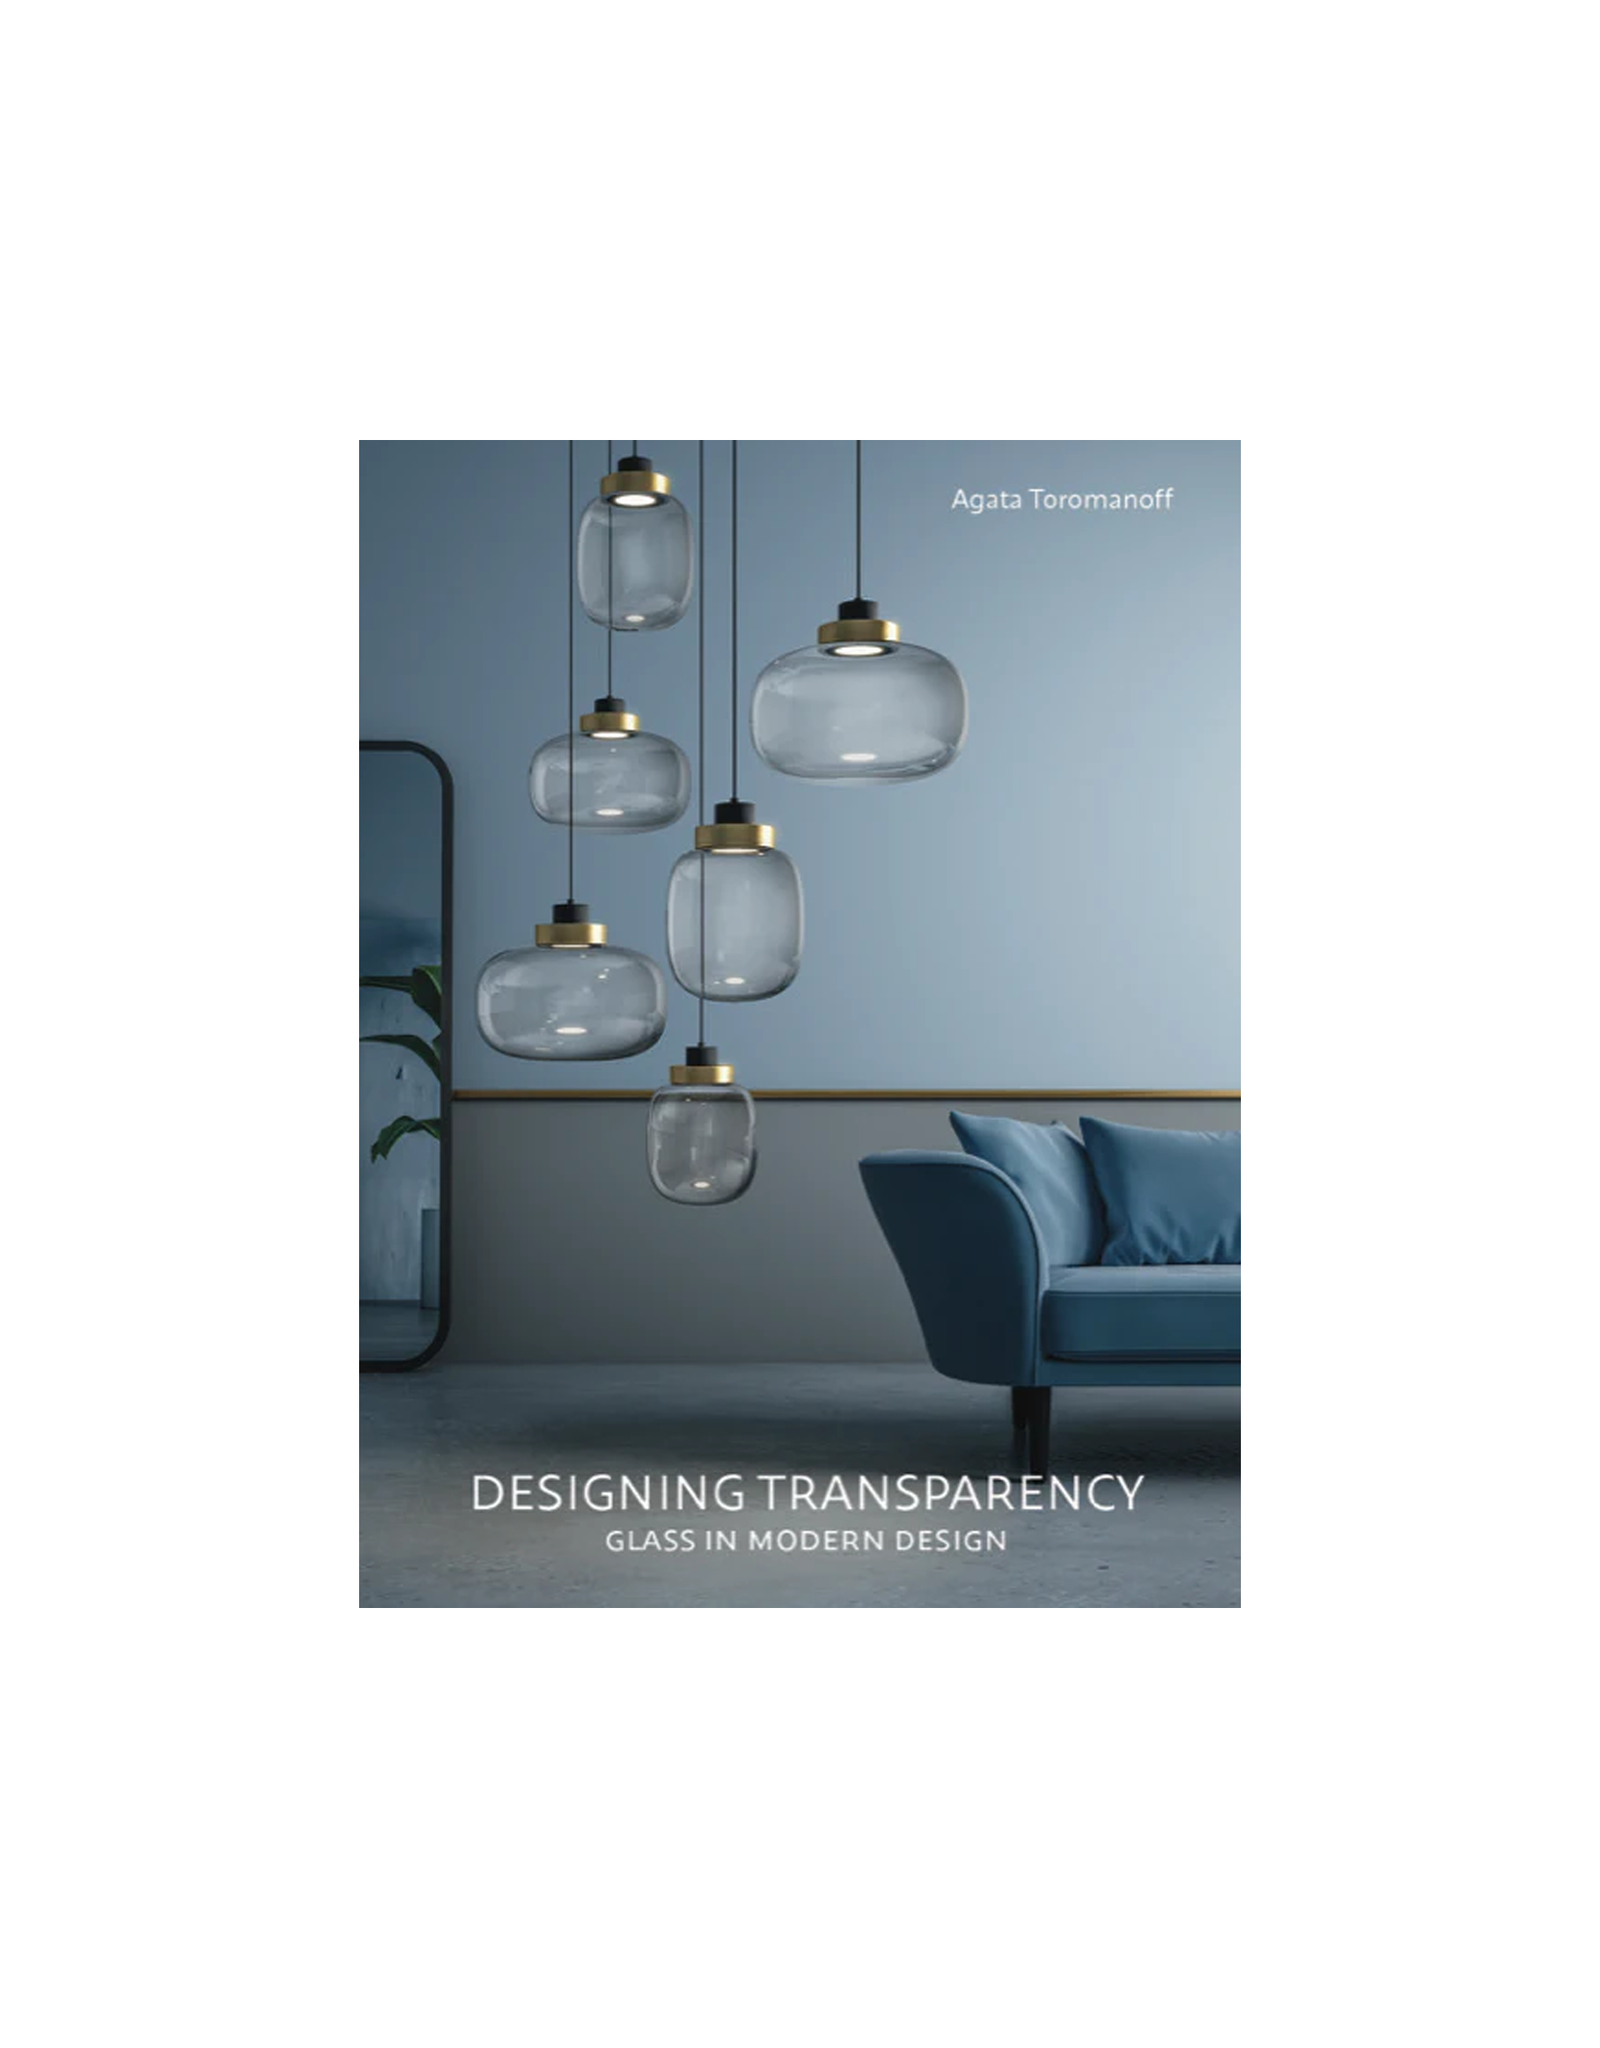 Designing Transparency: Glass in Modern Design